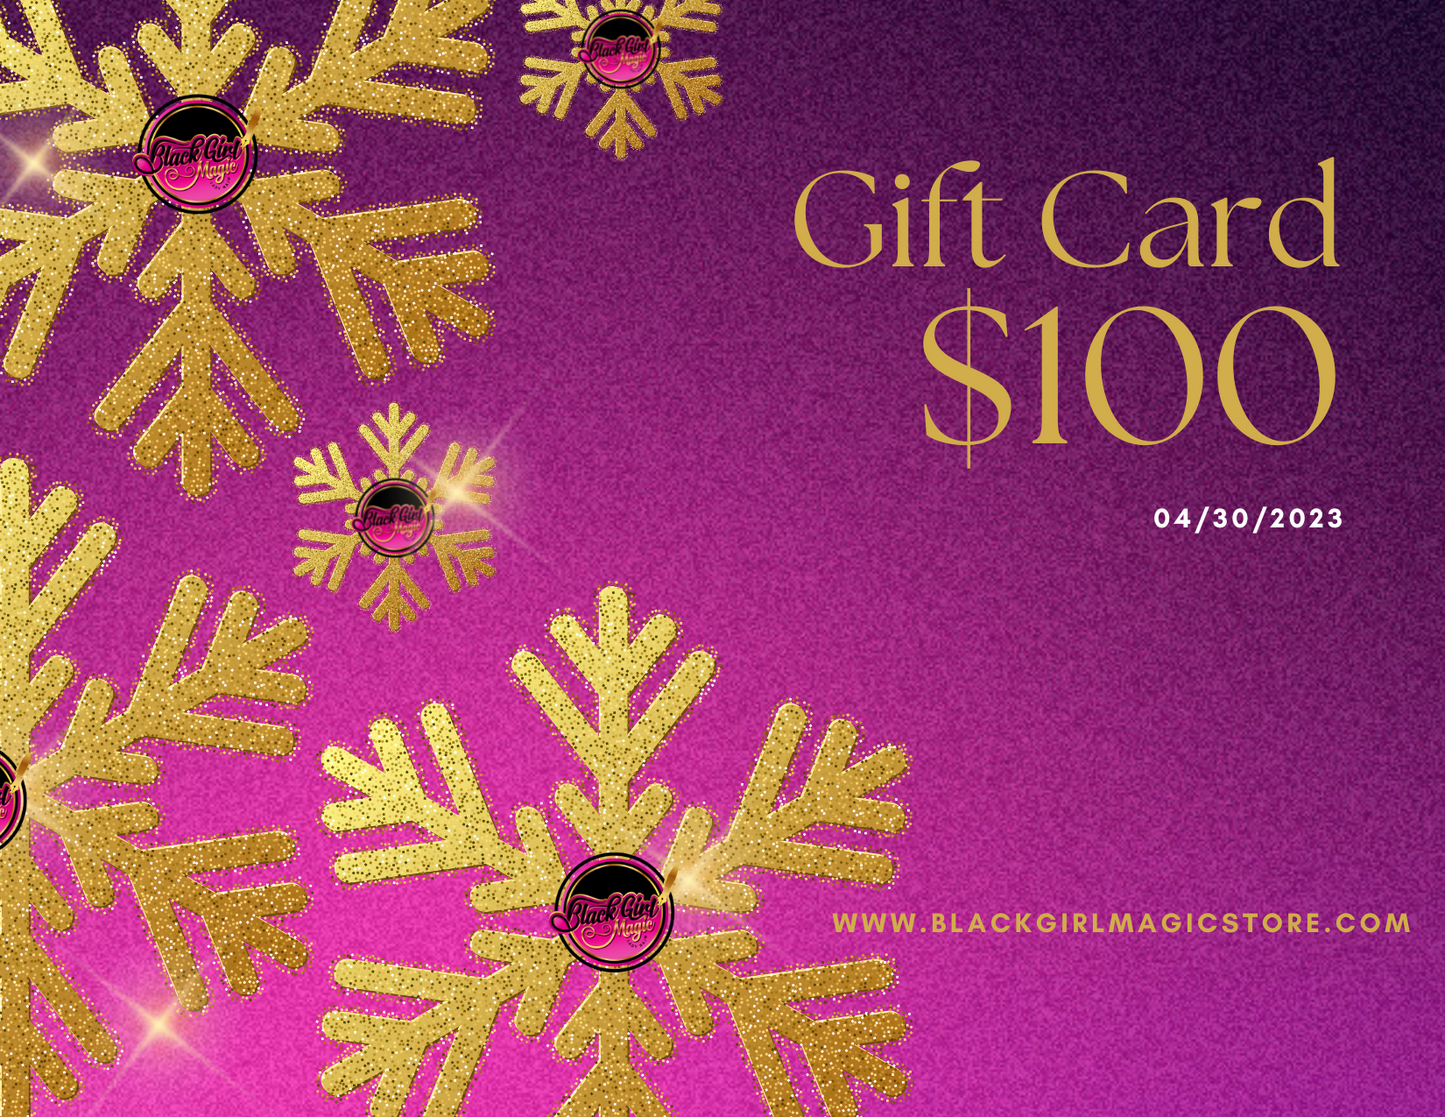 Black Girl Magic $100 Gift Card